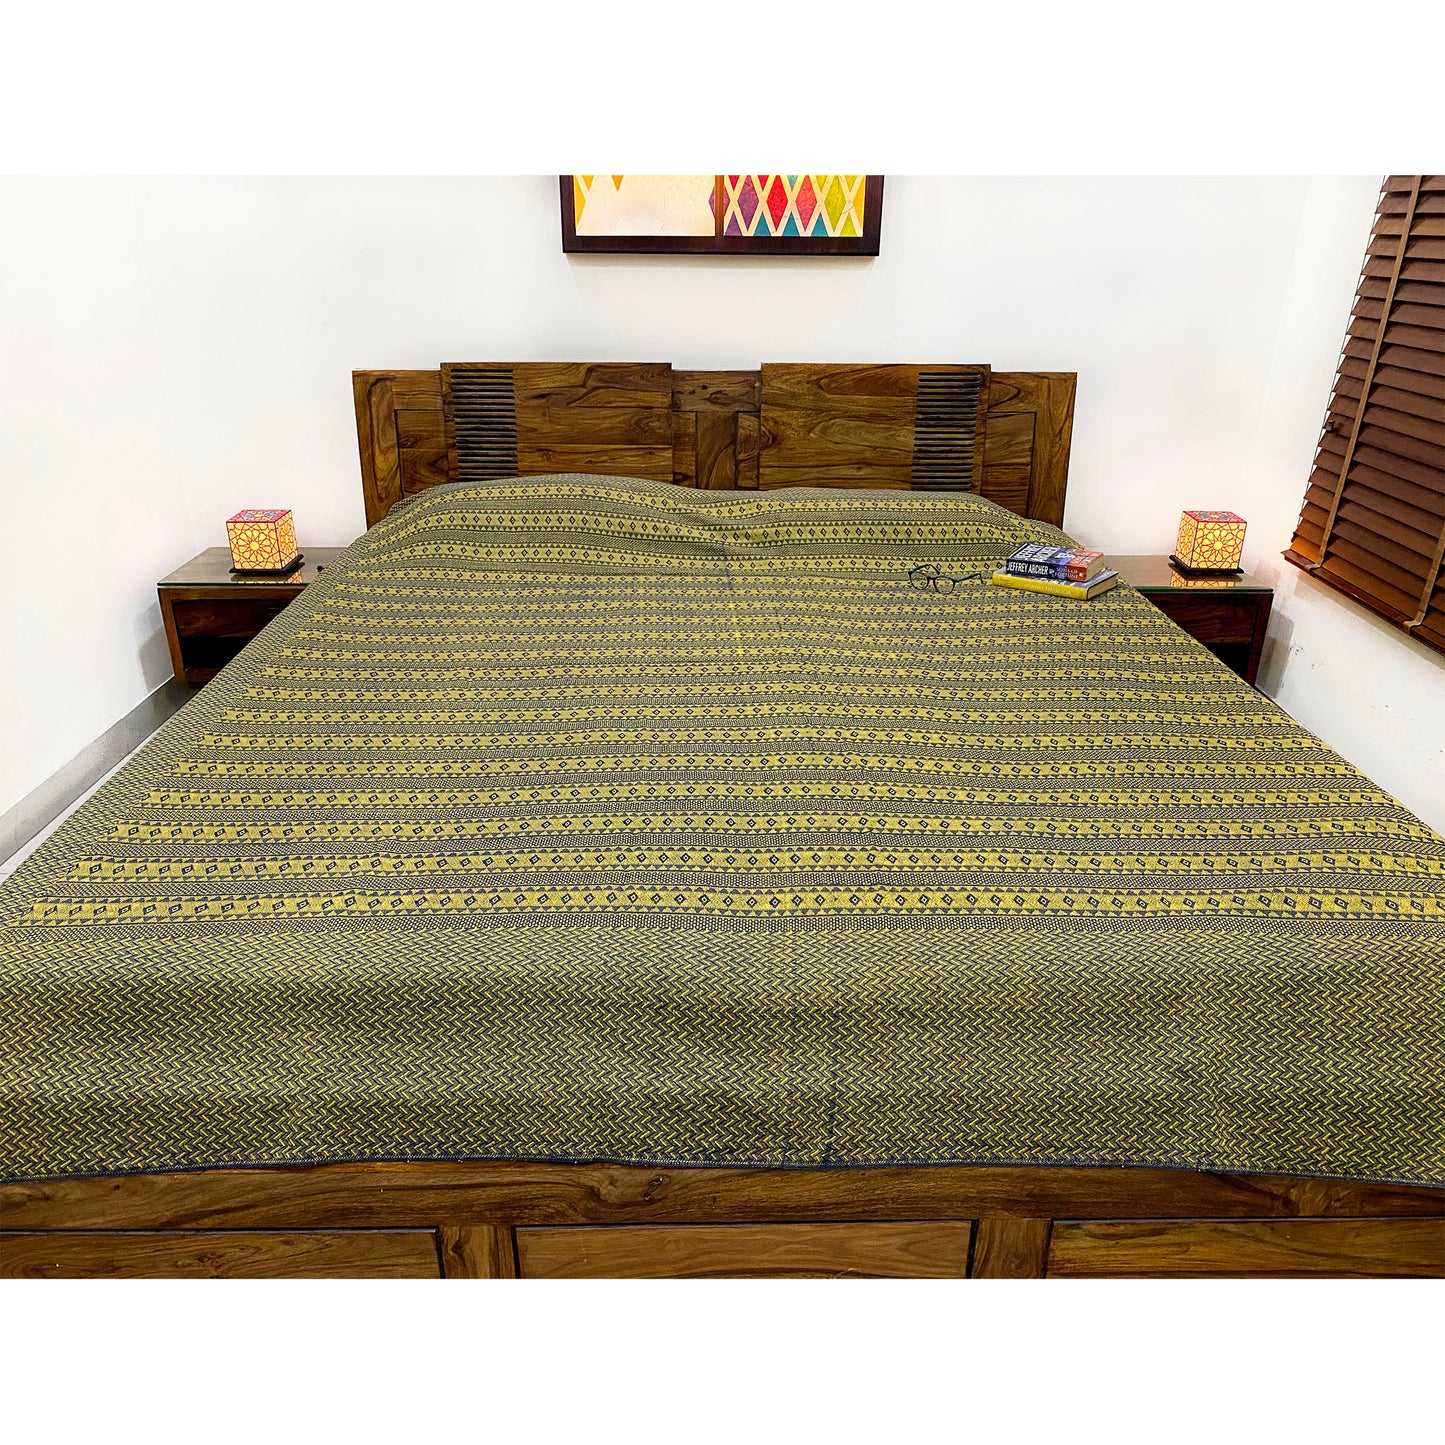 handloom-fabinida-type-bed-cover-india